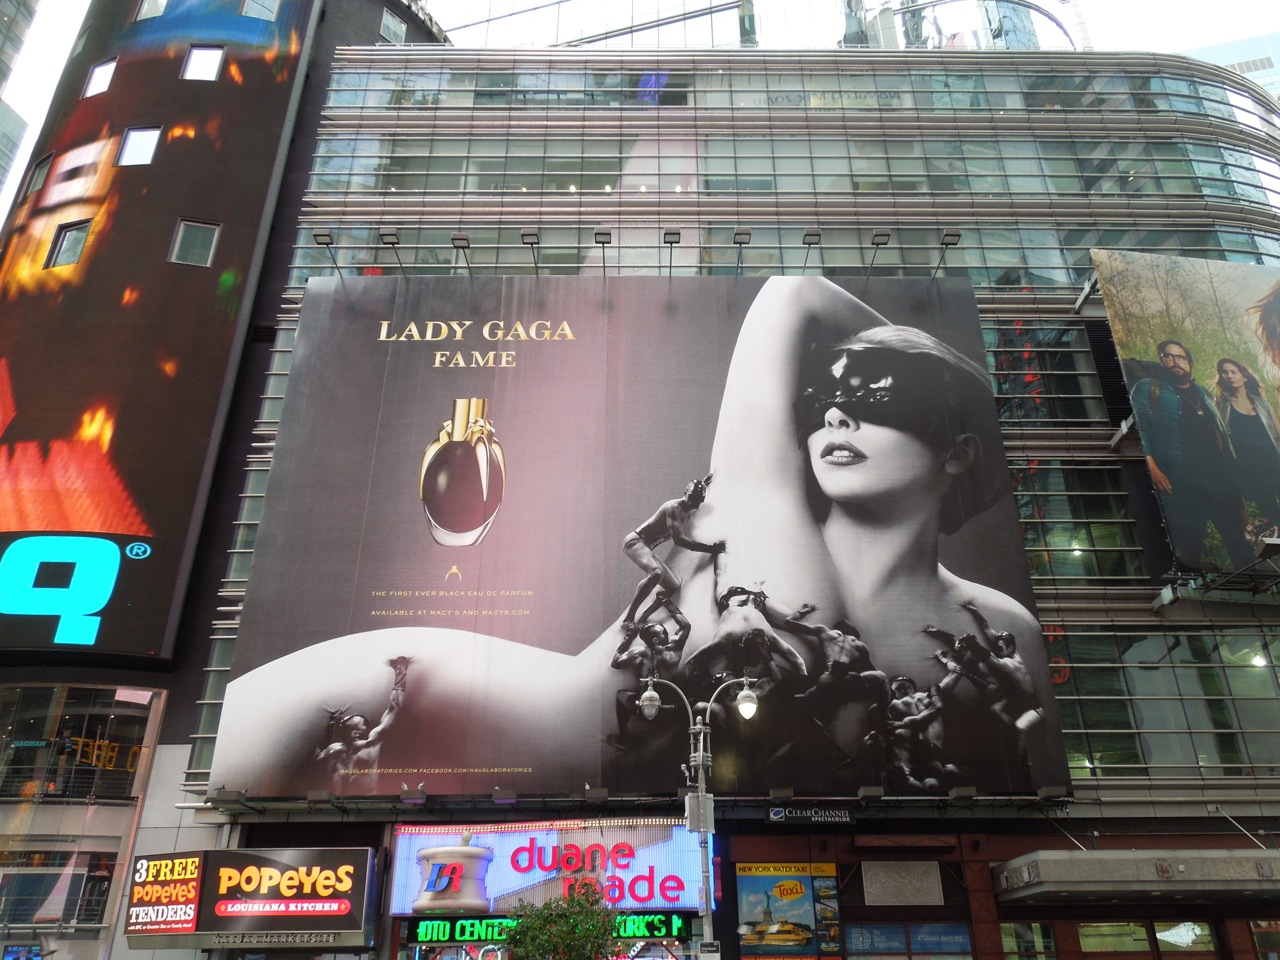 http://4.bp.blogspot.com/-zKbzul9D6wM/UEe9YMtVZZI/AAAAAAAAzTc/IBm-t3N18Hs/s1600/LadyGaga+Fame+fragrance+billboard.jpg